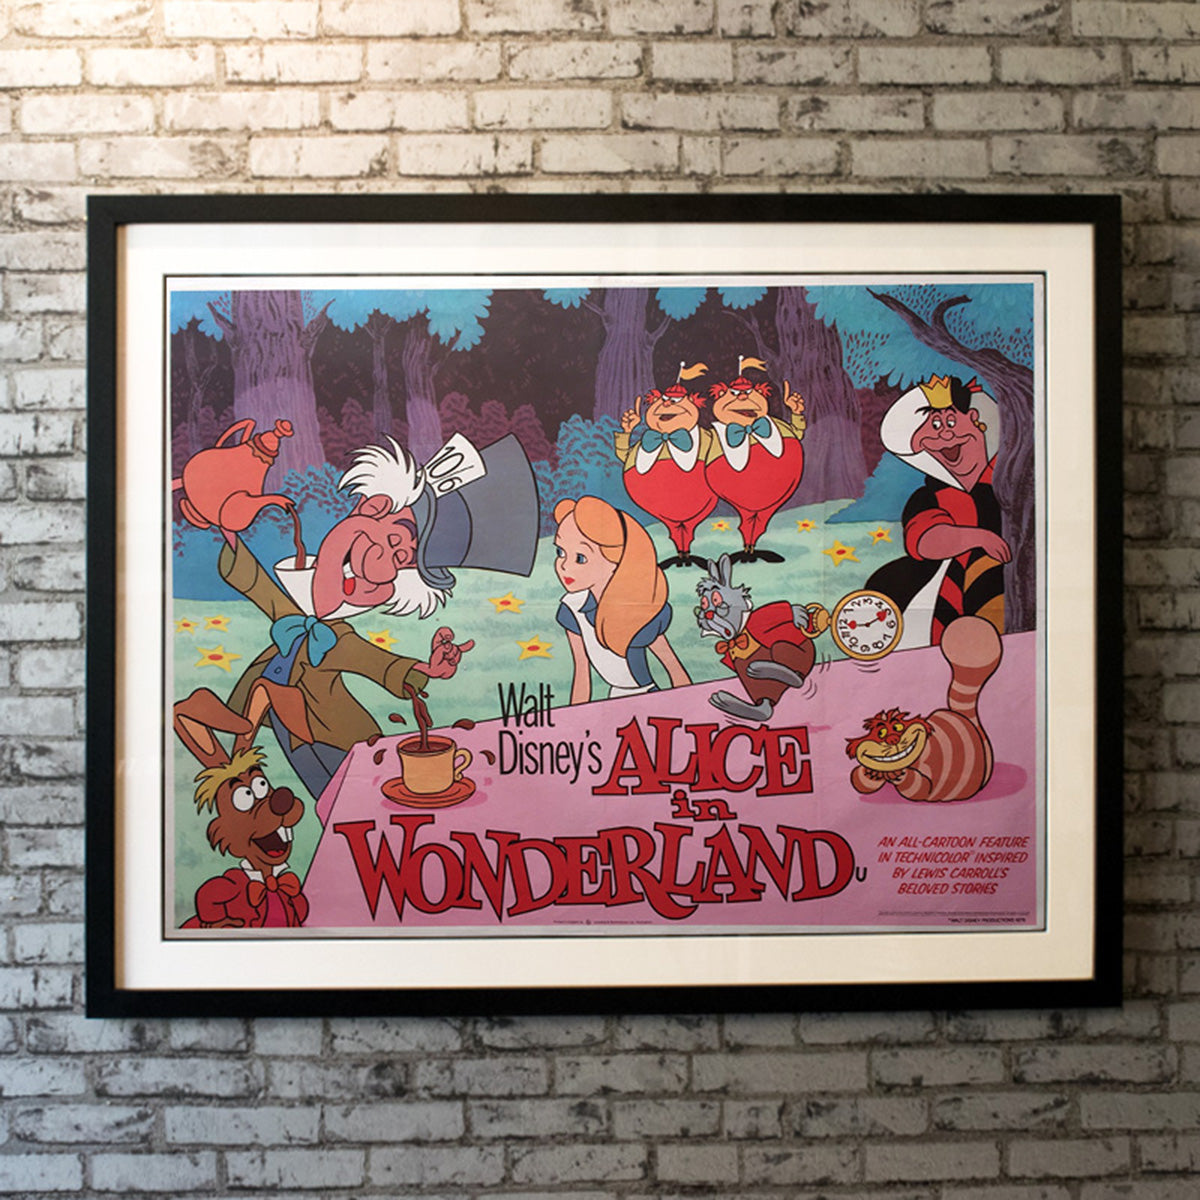 Original Movie Poster of Alice In Wonderland (1978R)